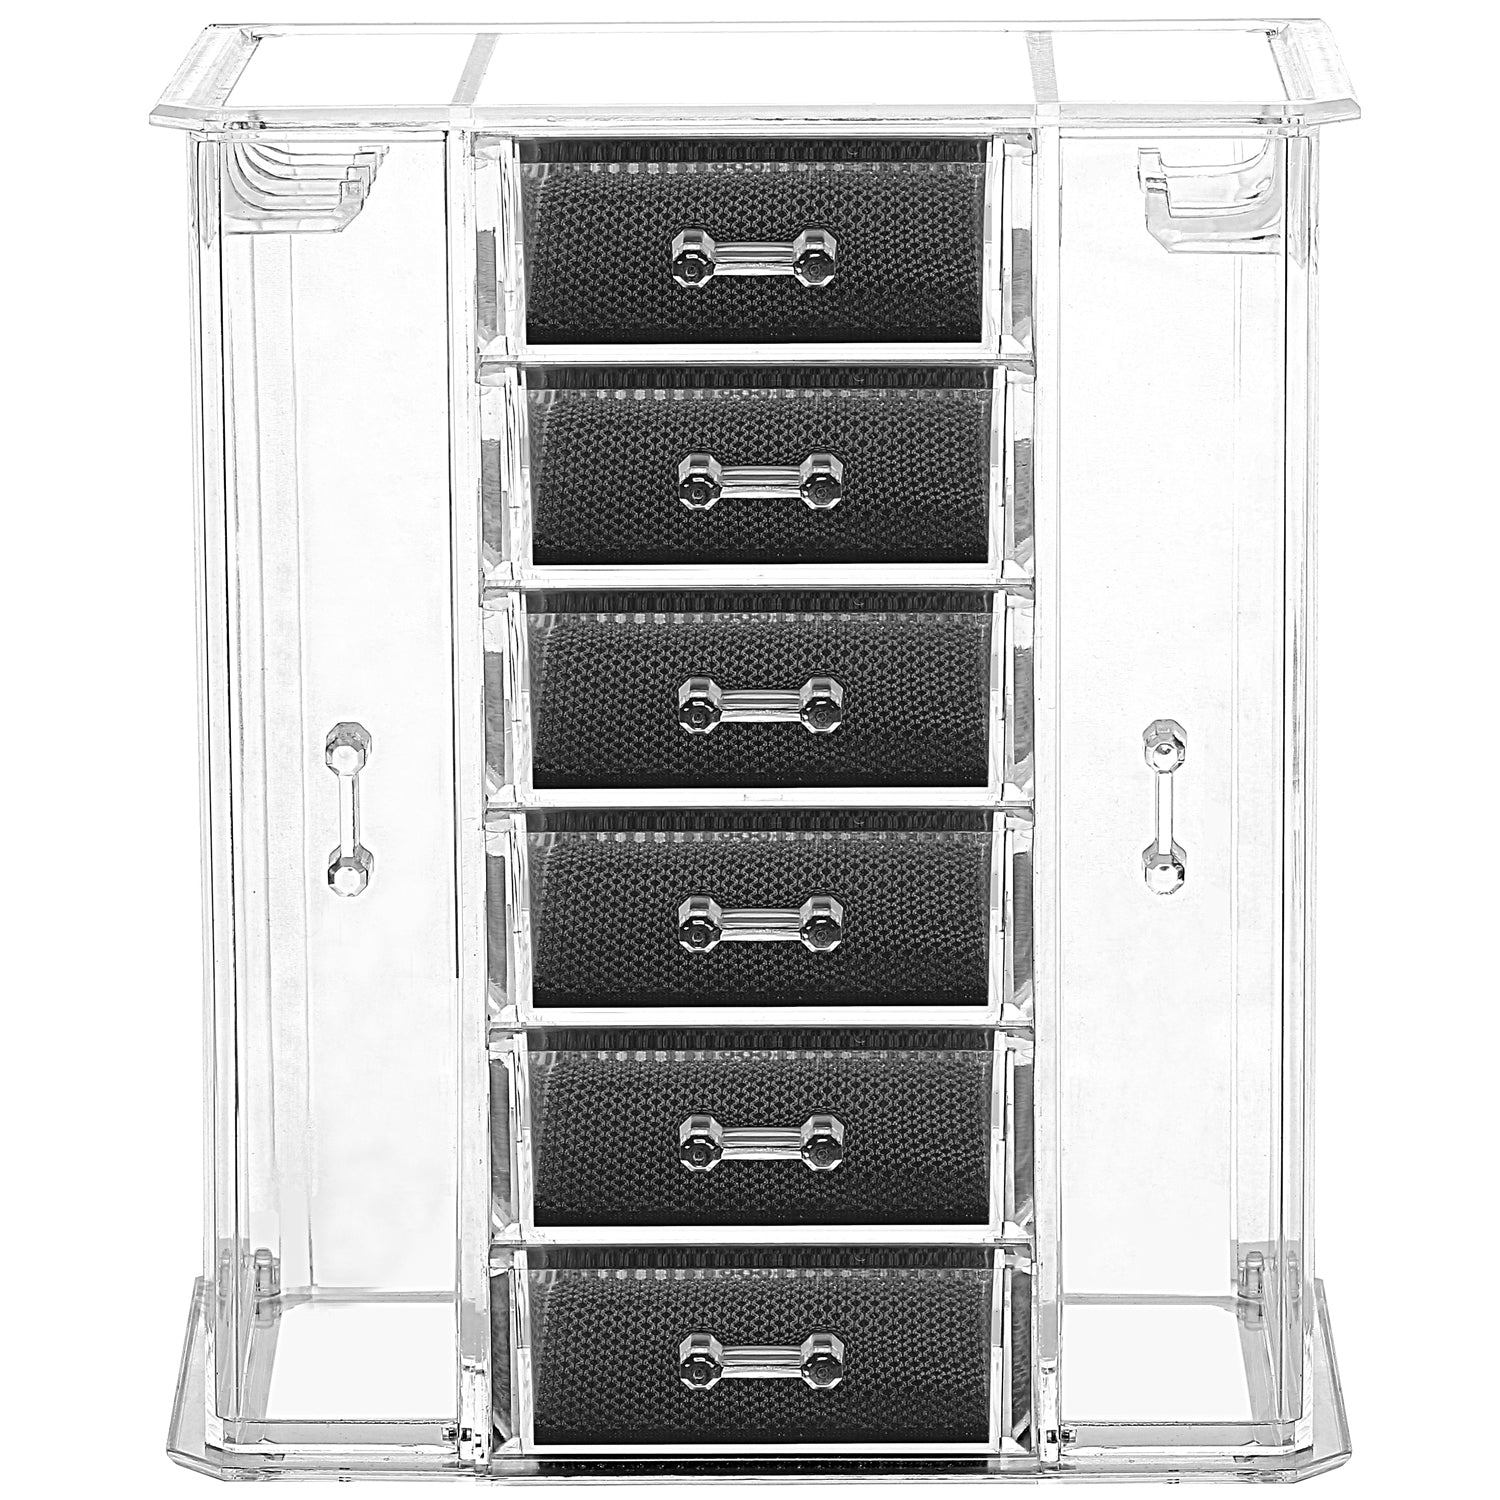 Acrylic Jewelry Box with 5 Drawers, Clear Earring Storage Organizer